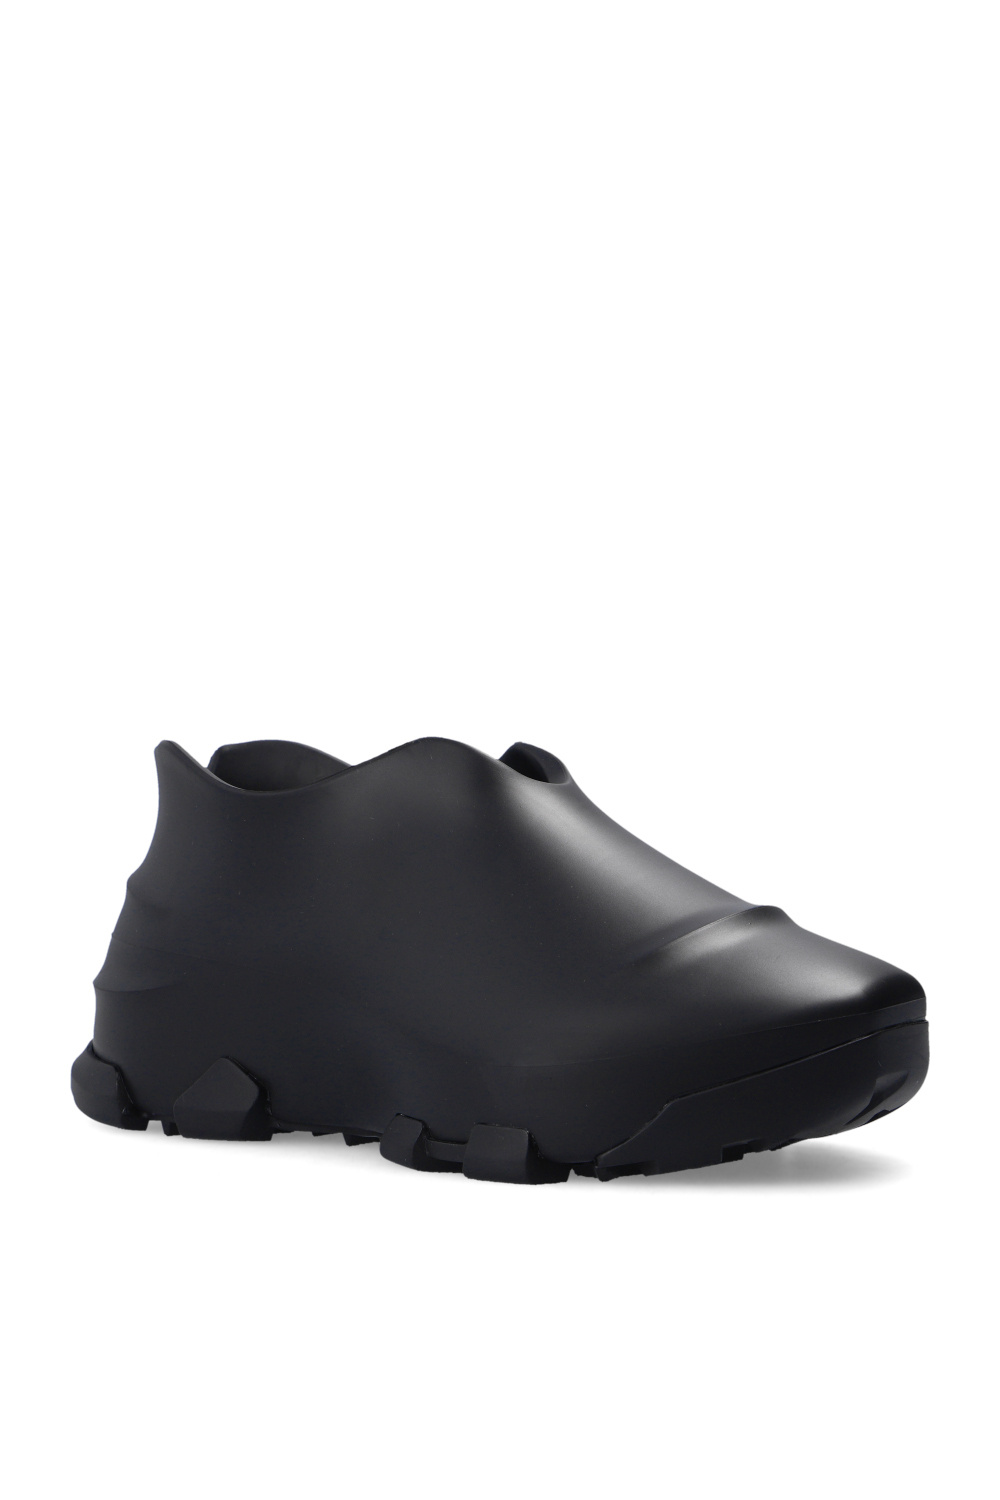 DAFITI SHOES EN896 - Black 'Monumental Mallow' shoes Givenchy 